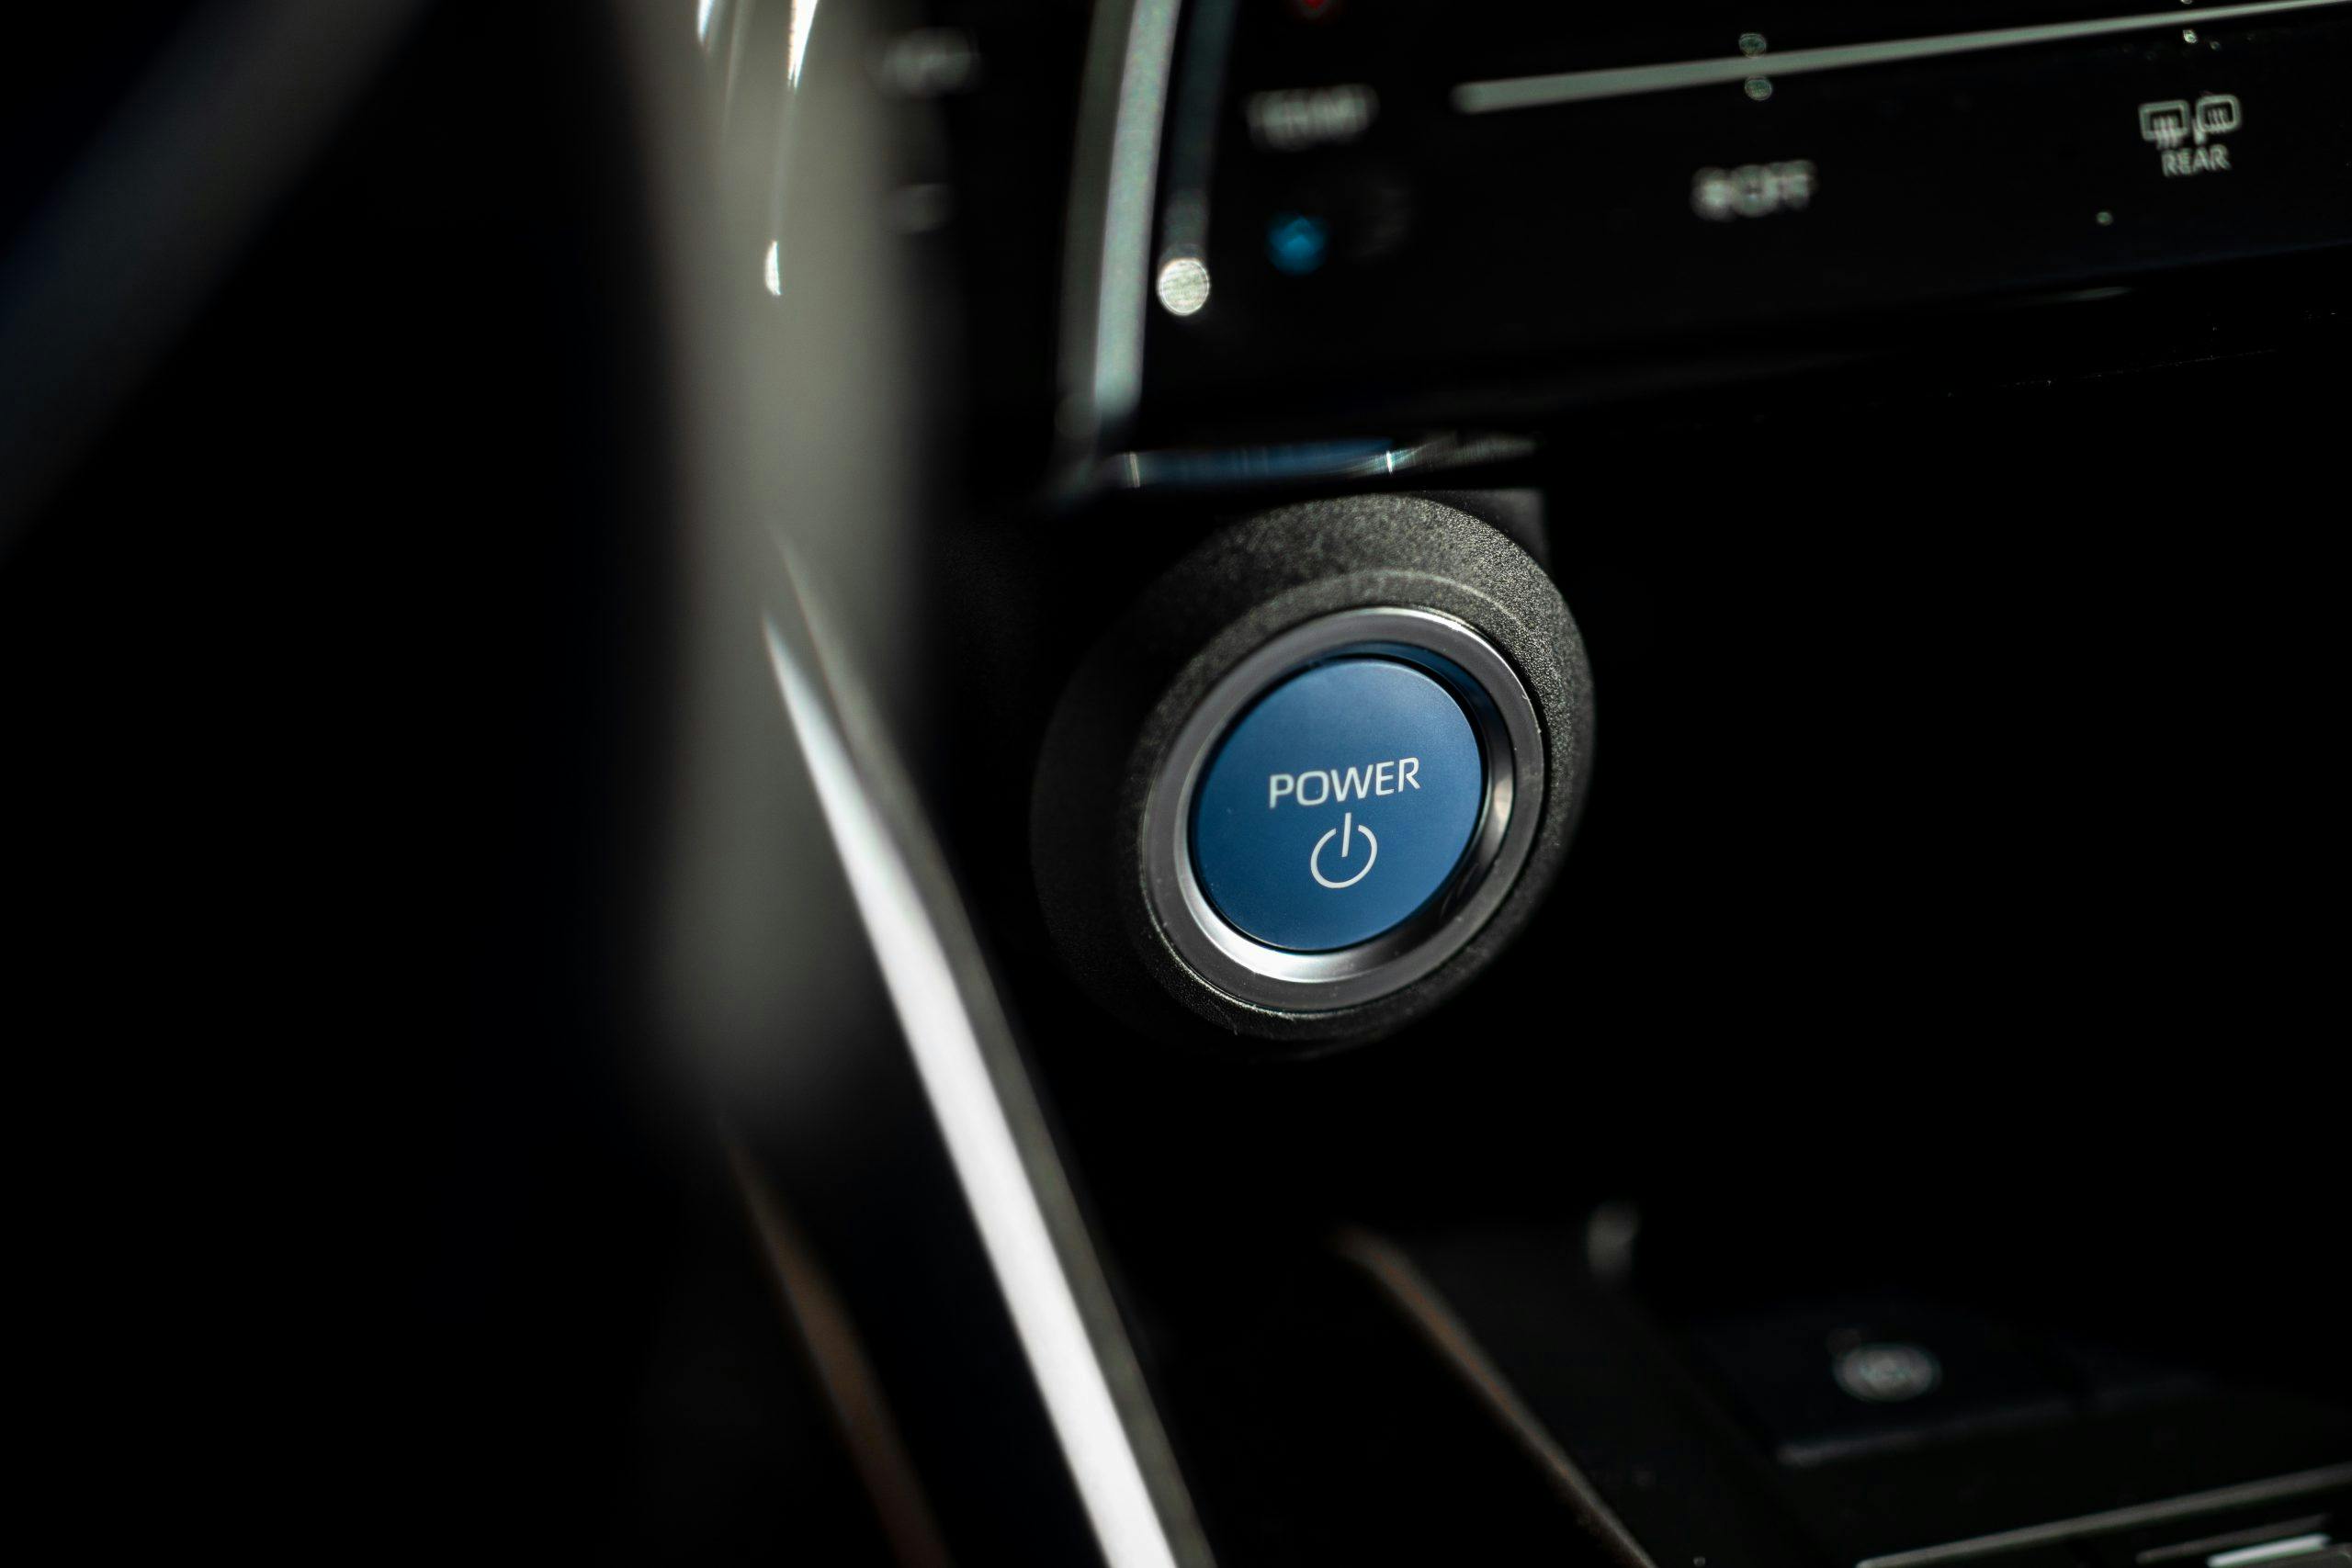 Toyota Venza interior power push button start